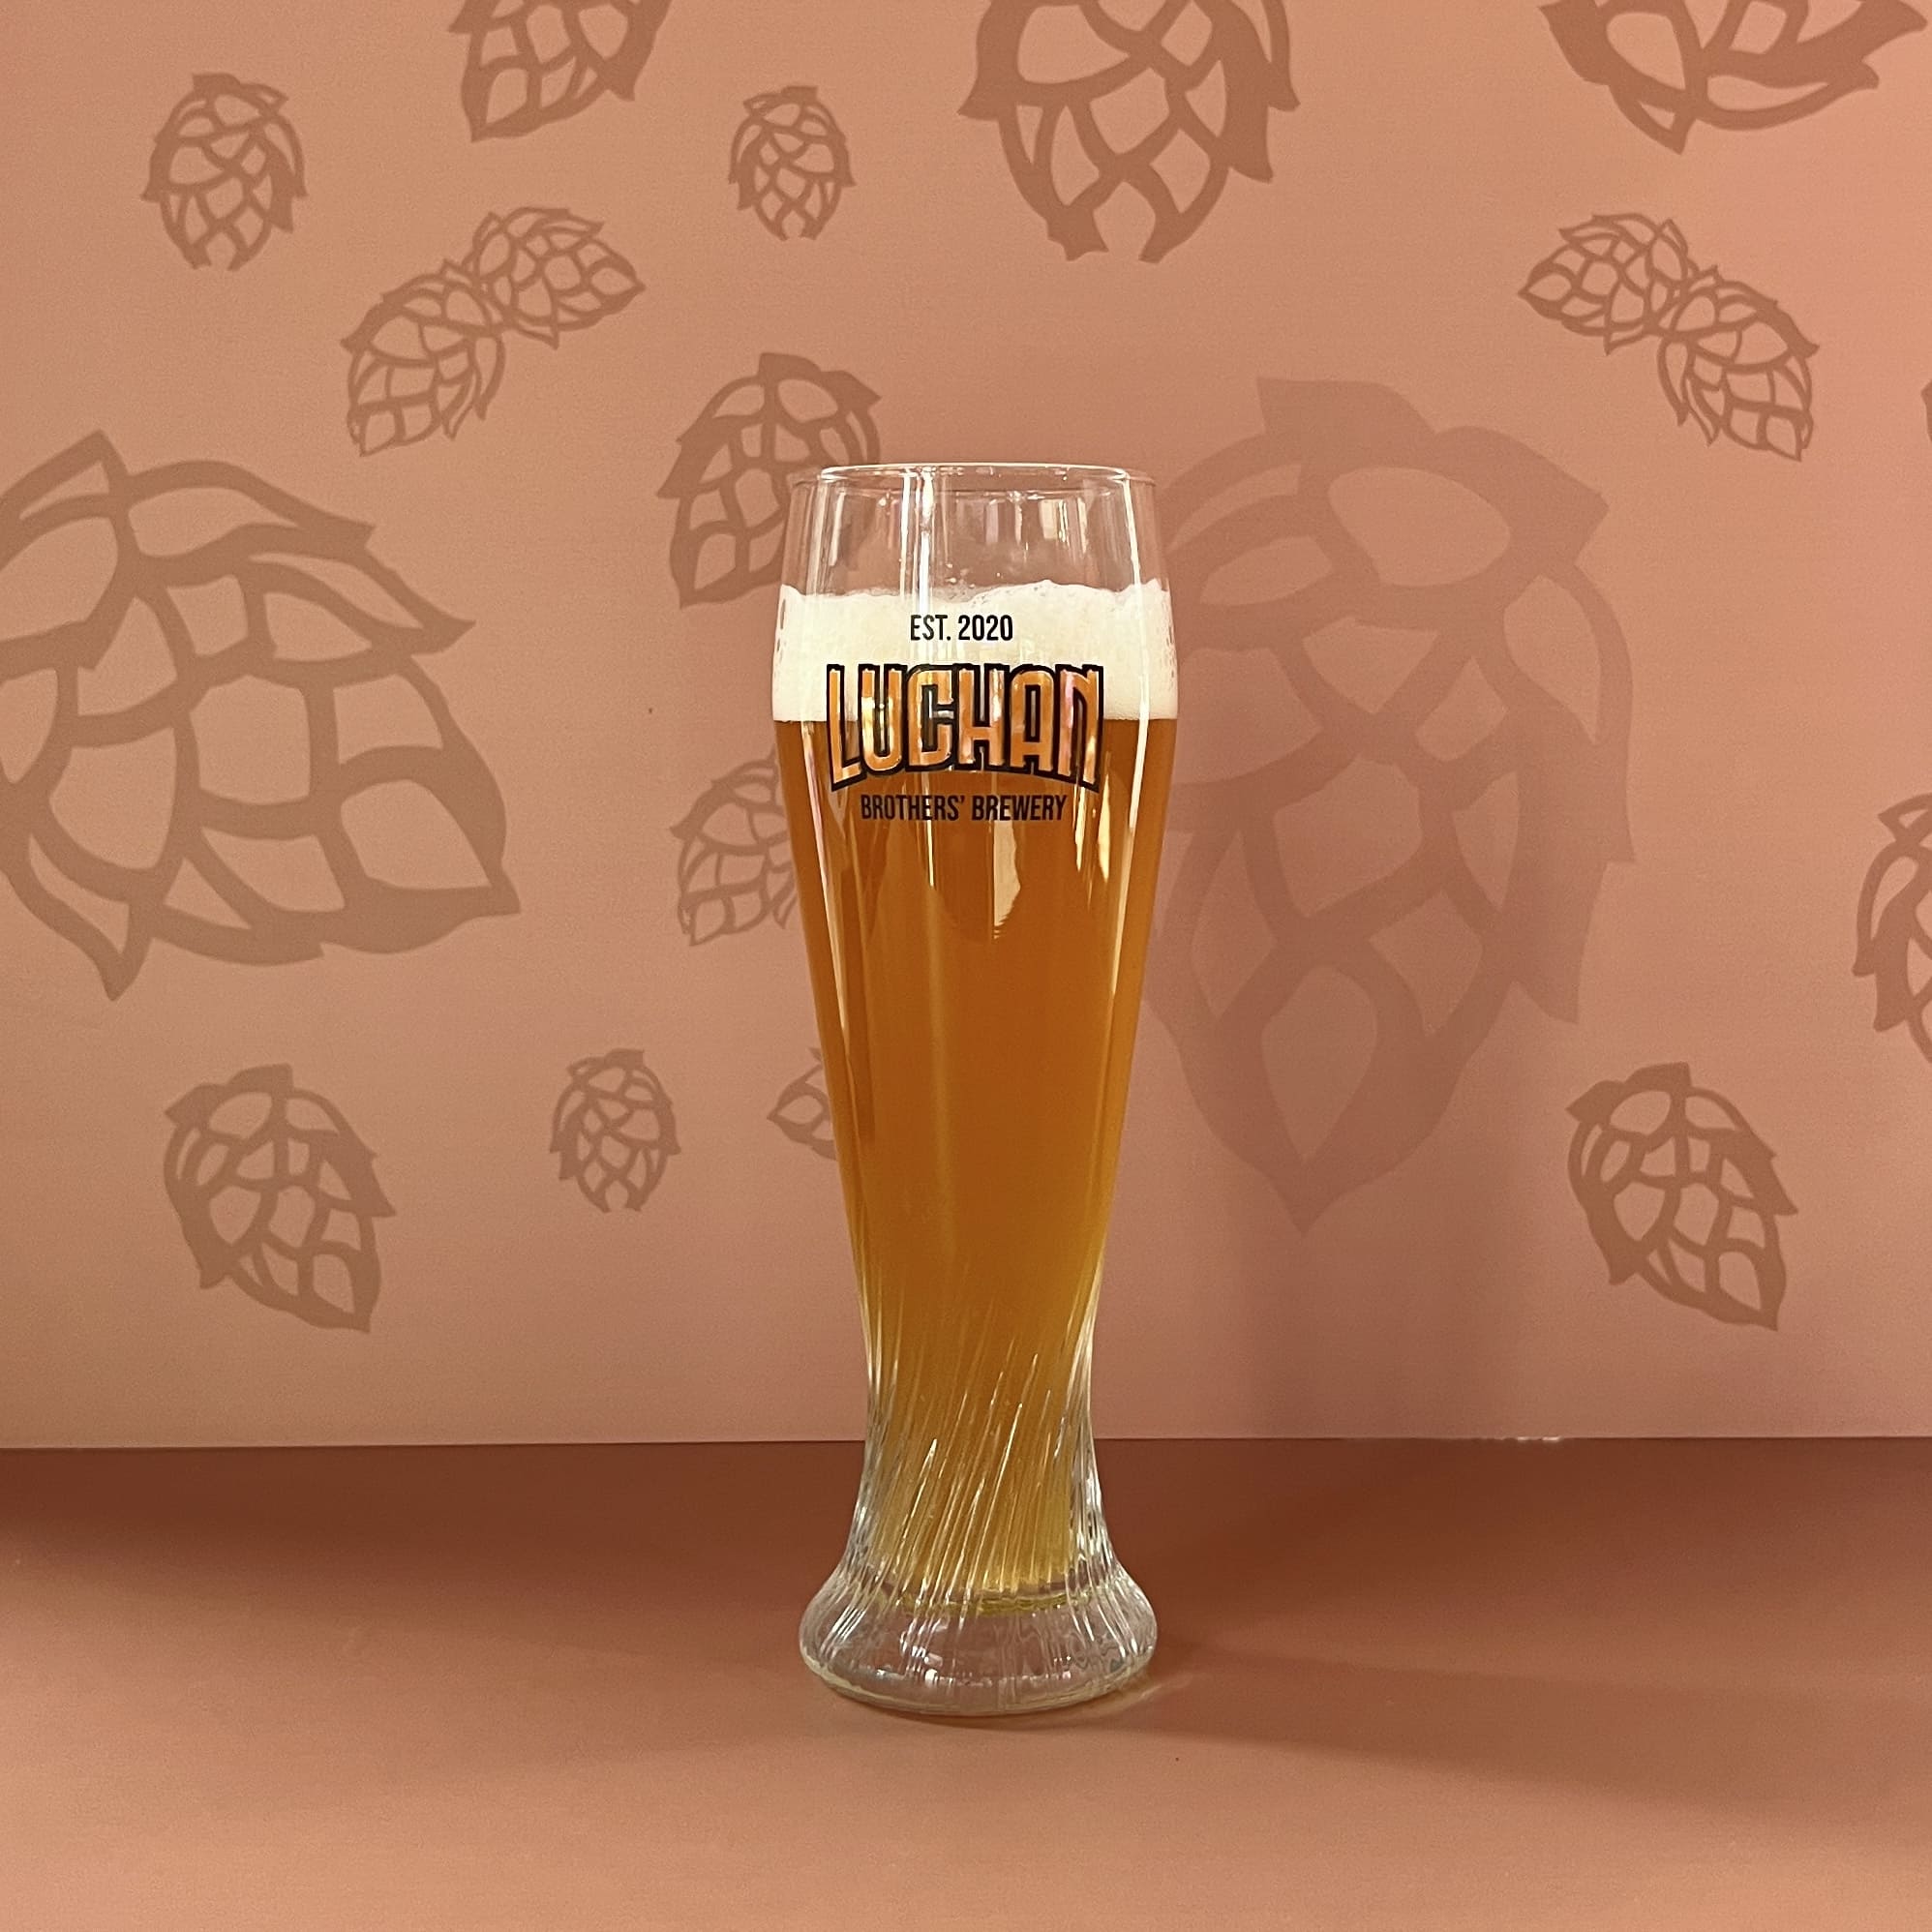 Вайцен/Weizen Пшеничне пиво